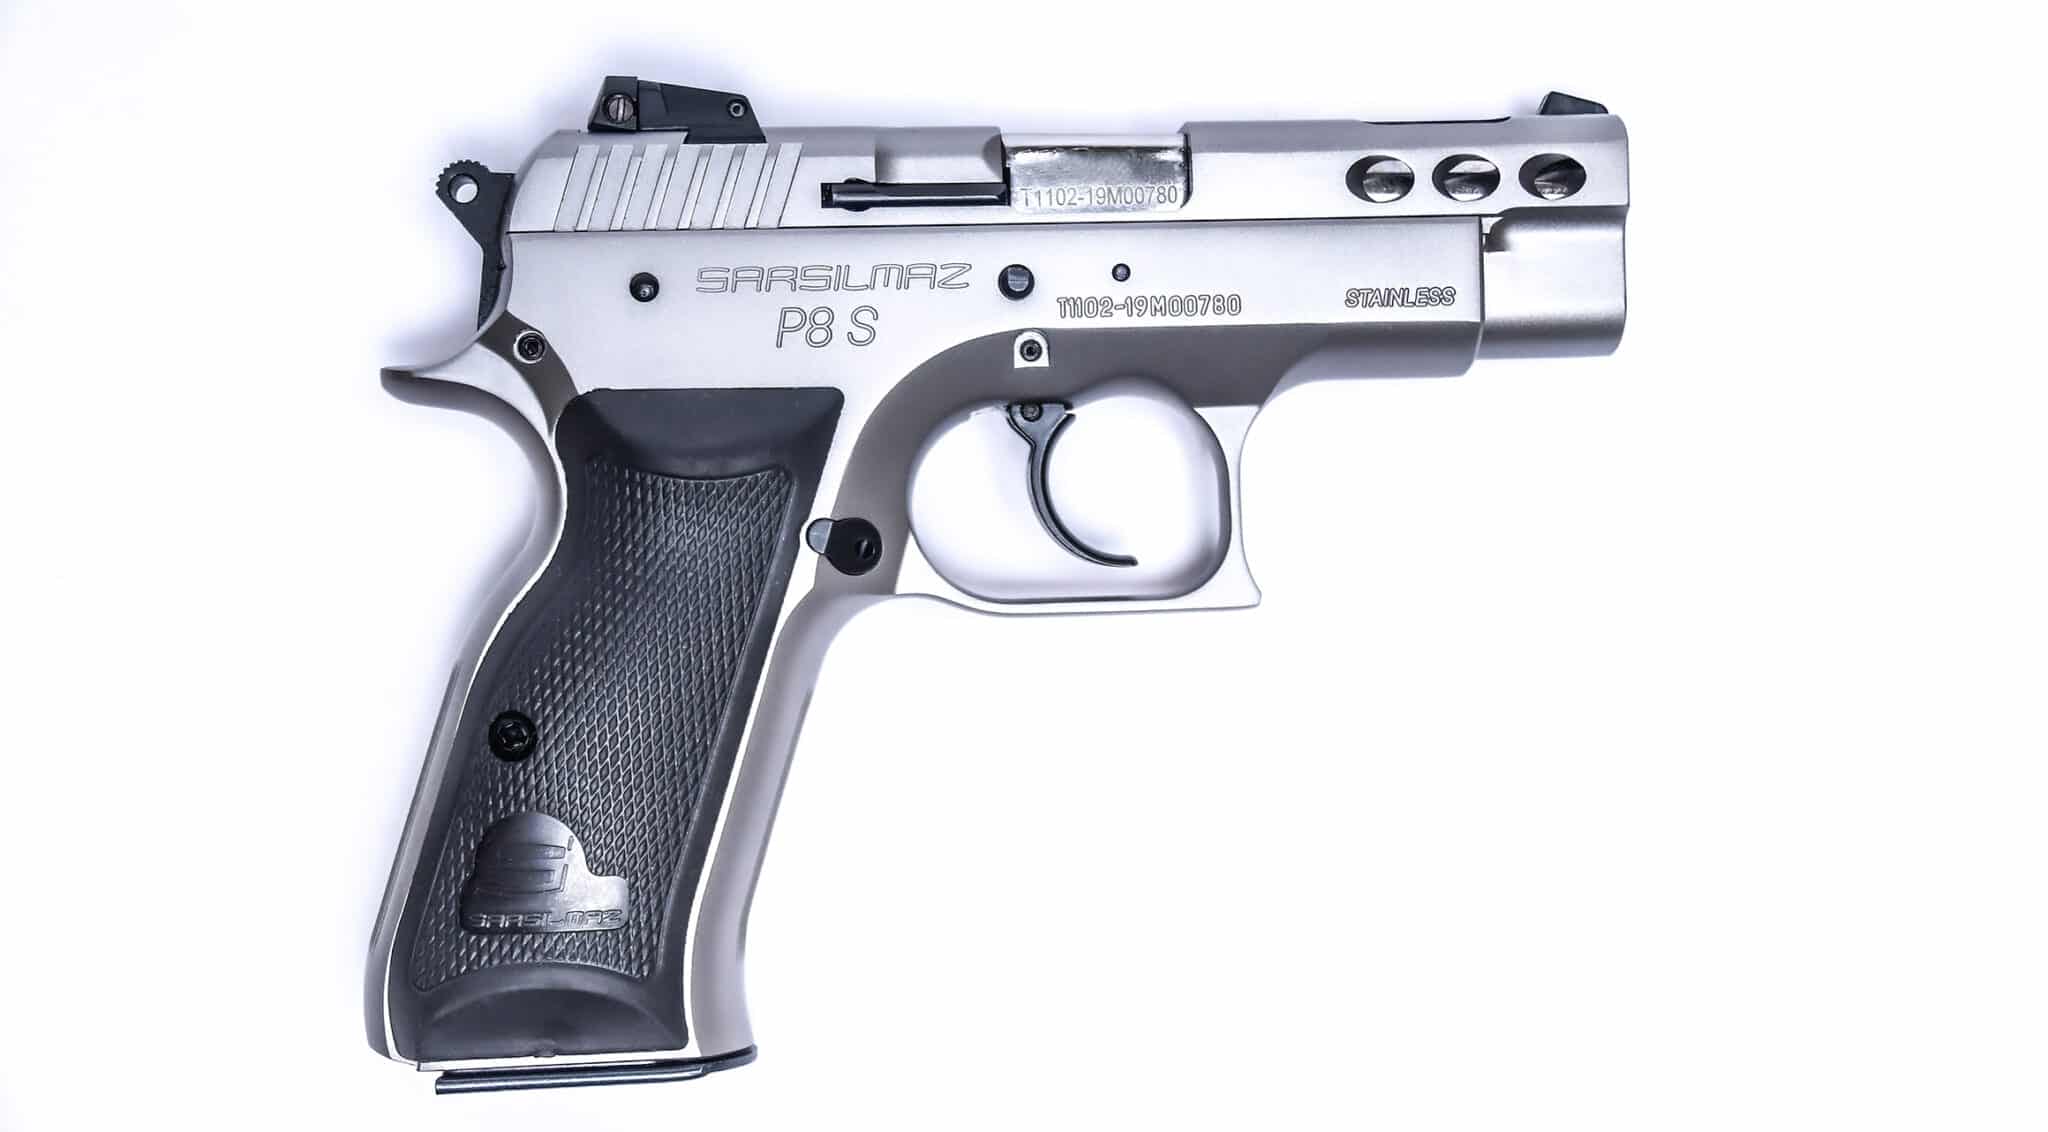 9mm pistol prices in pakistan